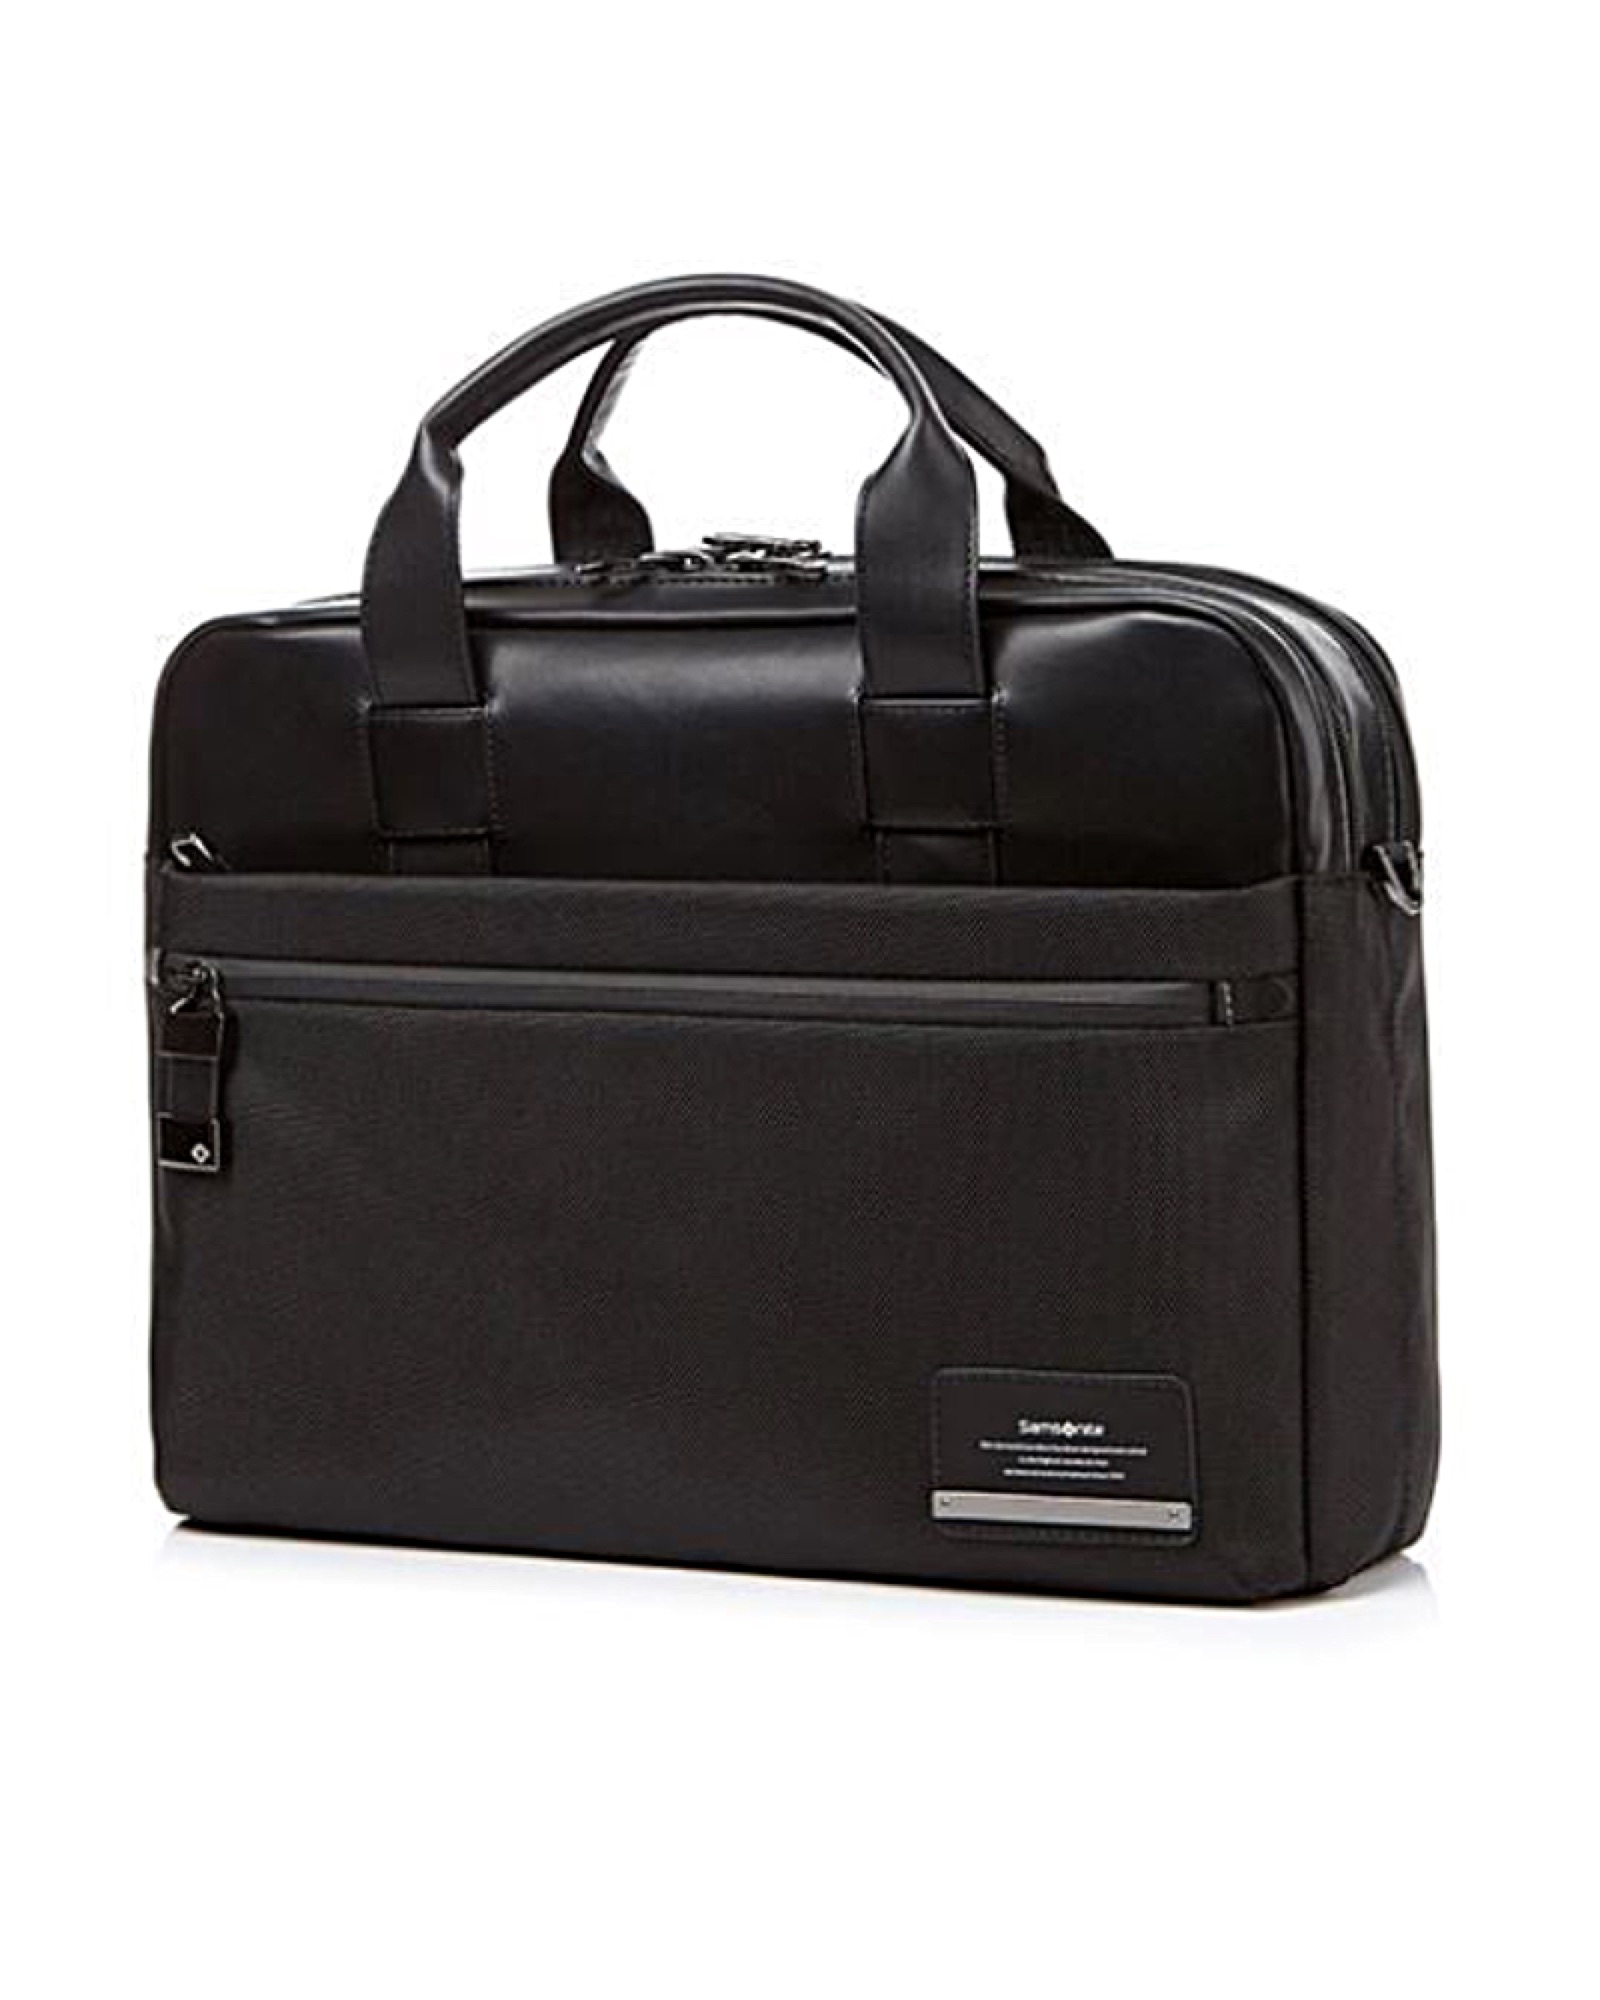 Samsonite Vestor - Bailhandle Laptop Bag M - Black by Samsonite Luggage ...